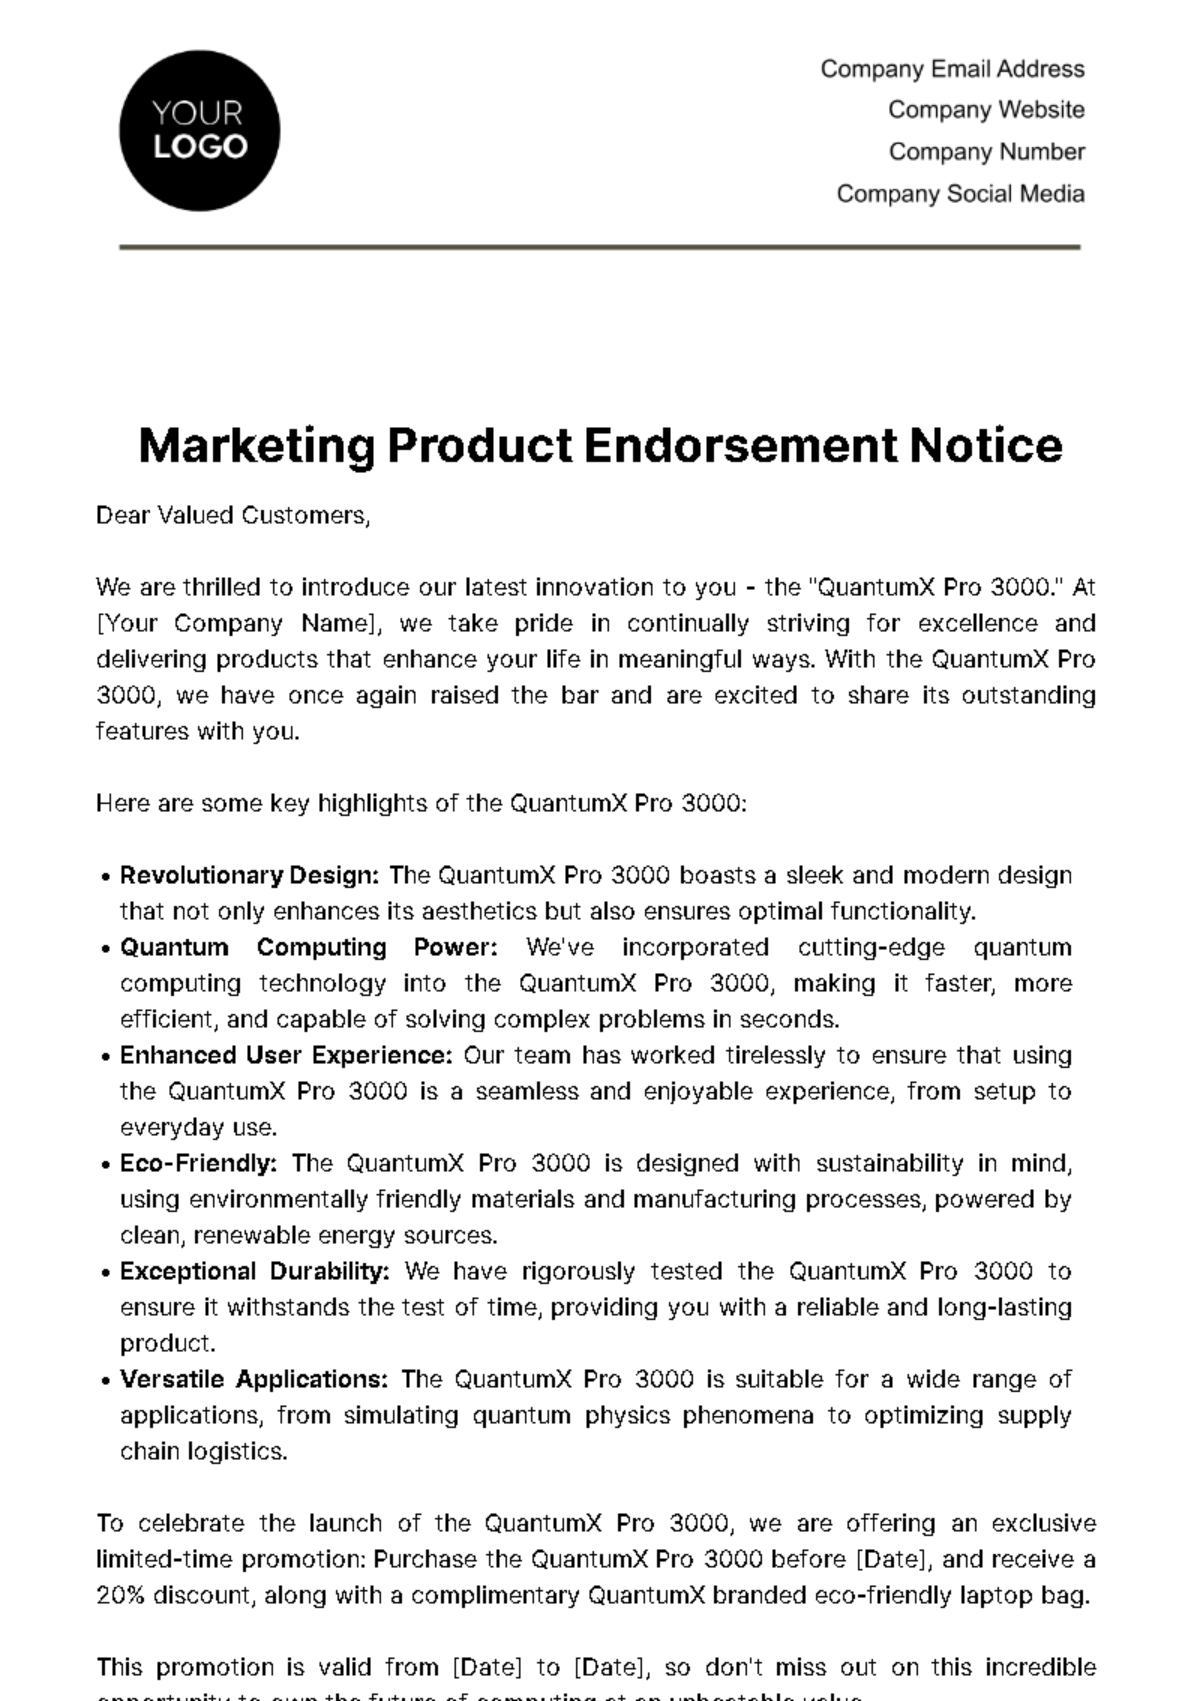 Marketing Product Endorsement Notice Template